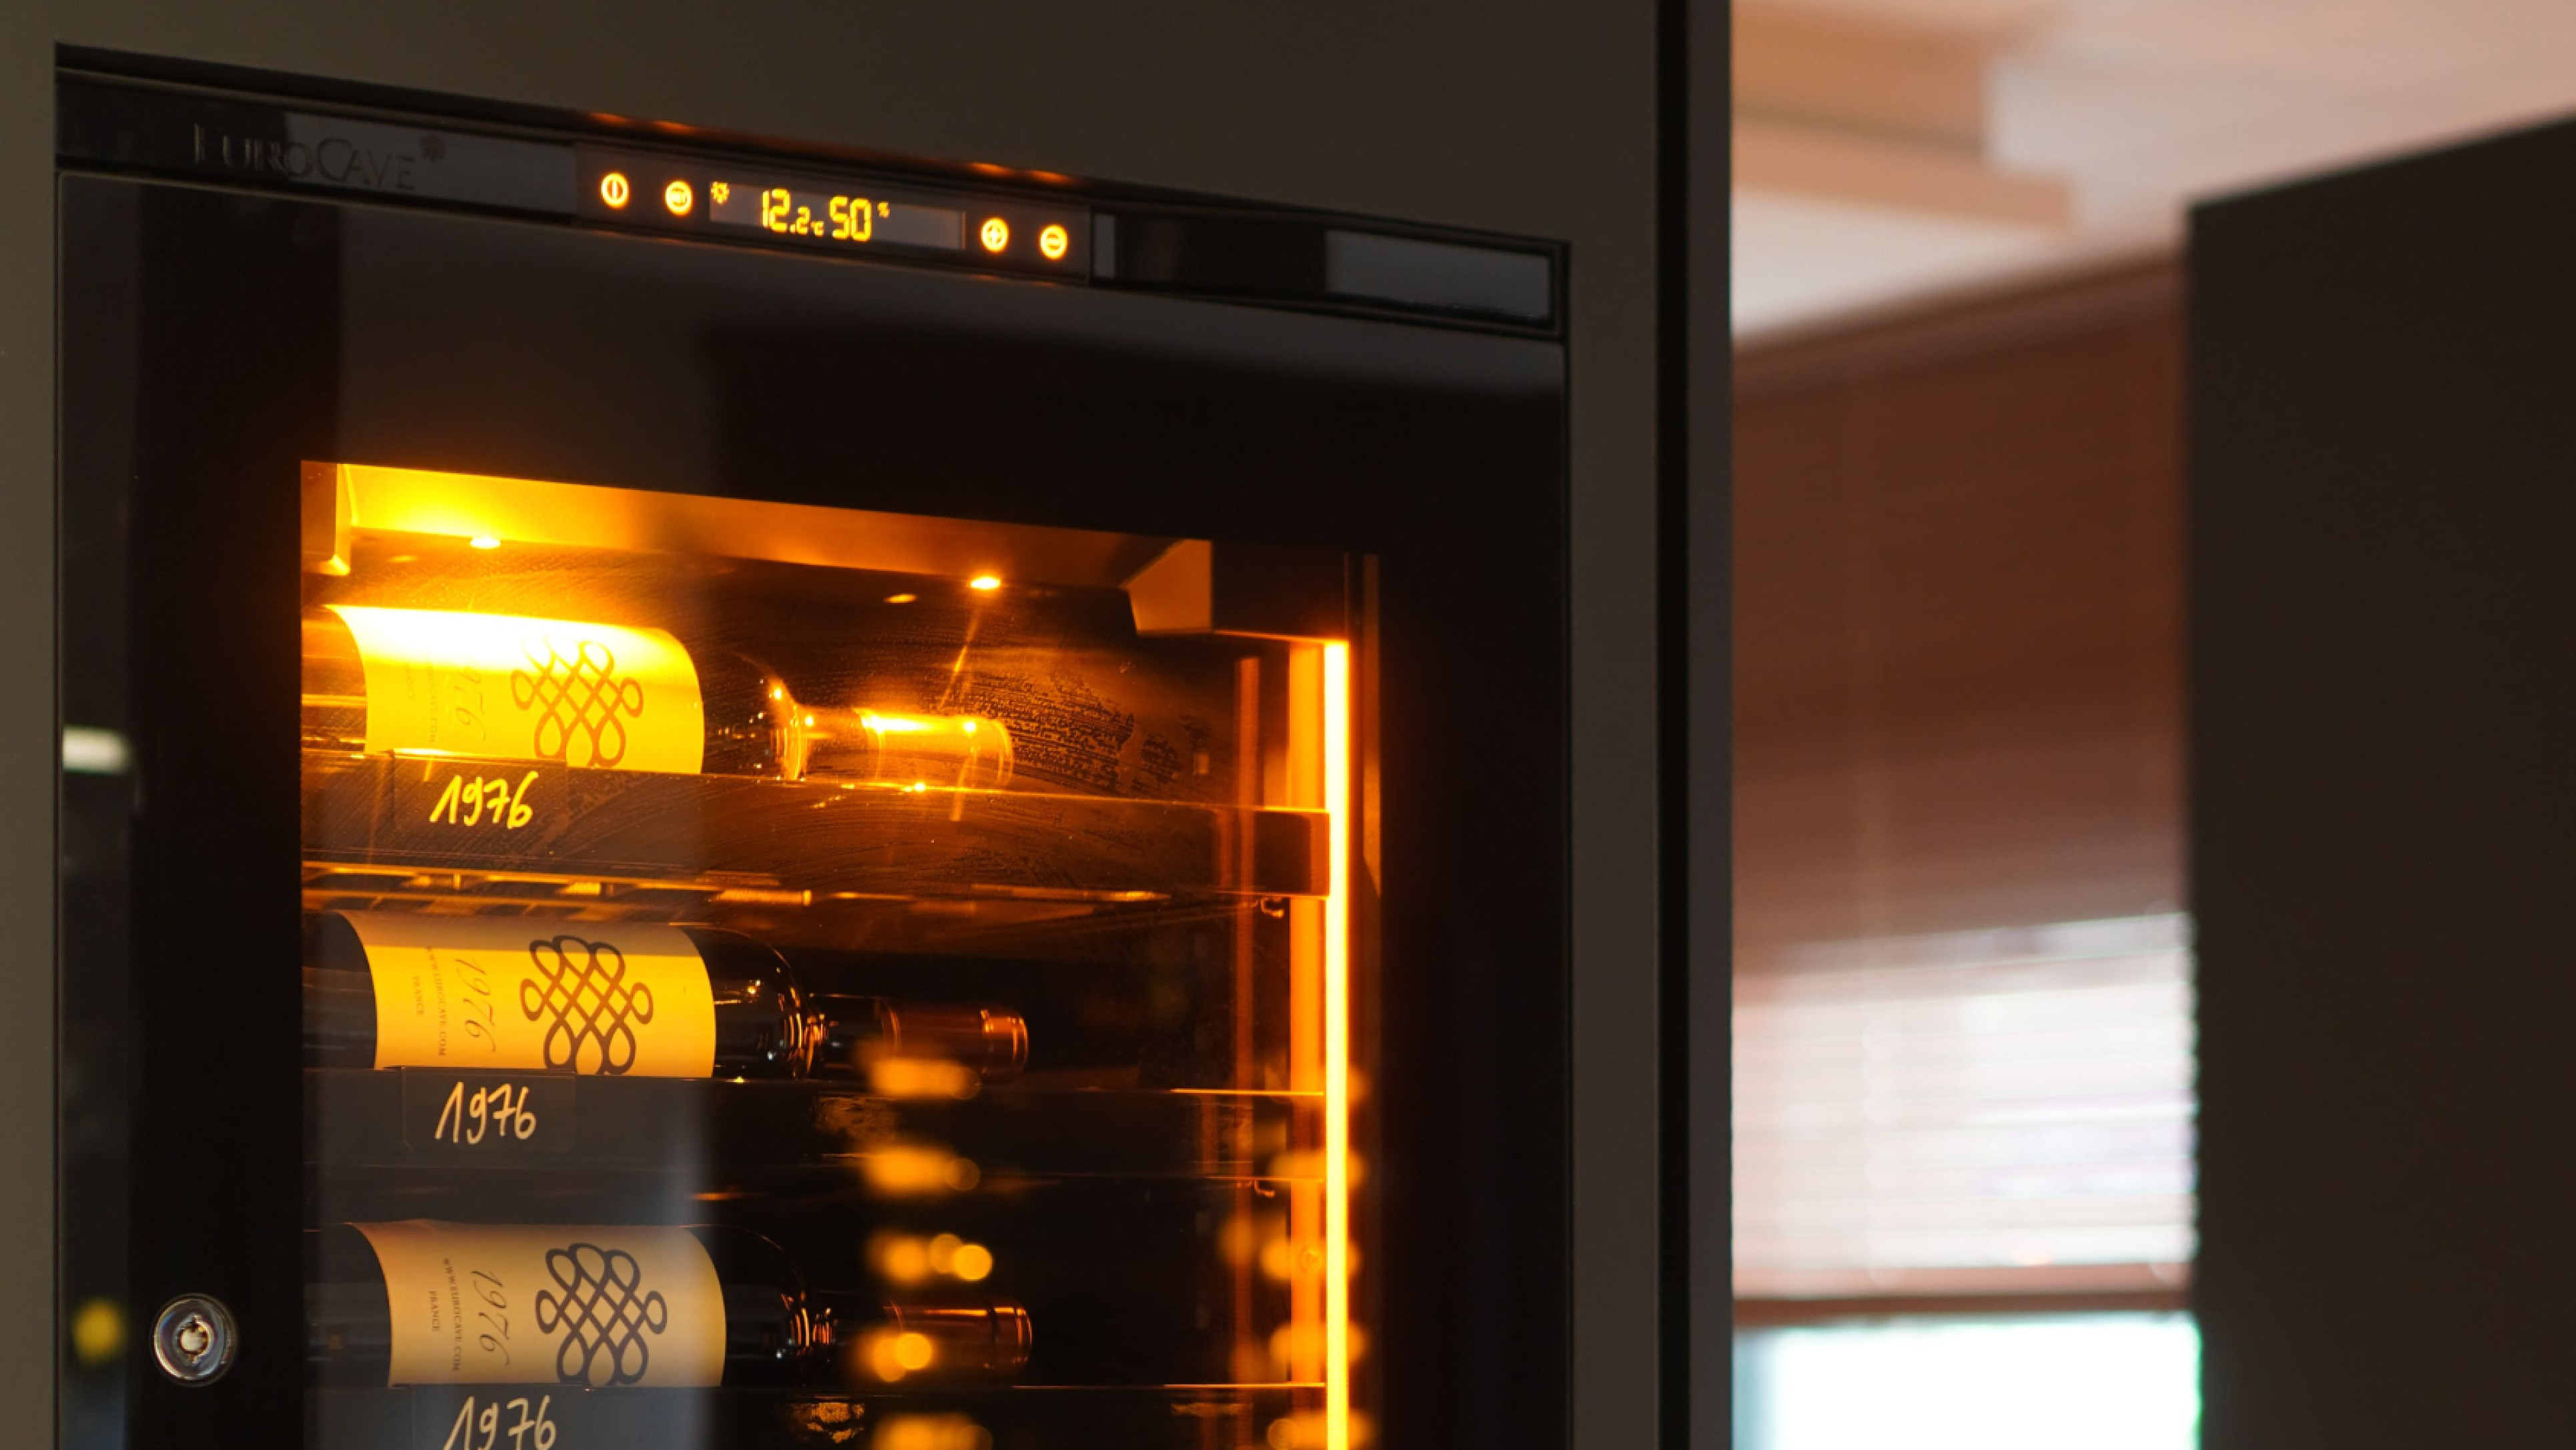 Built-in wine cooler amber light modular and customizable shelf